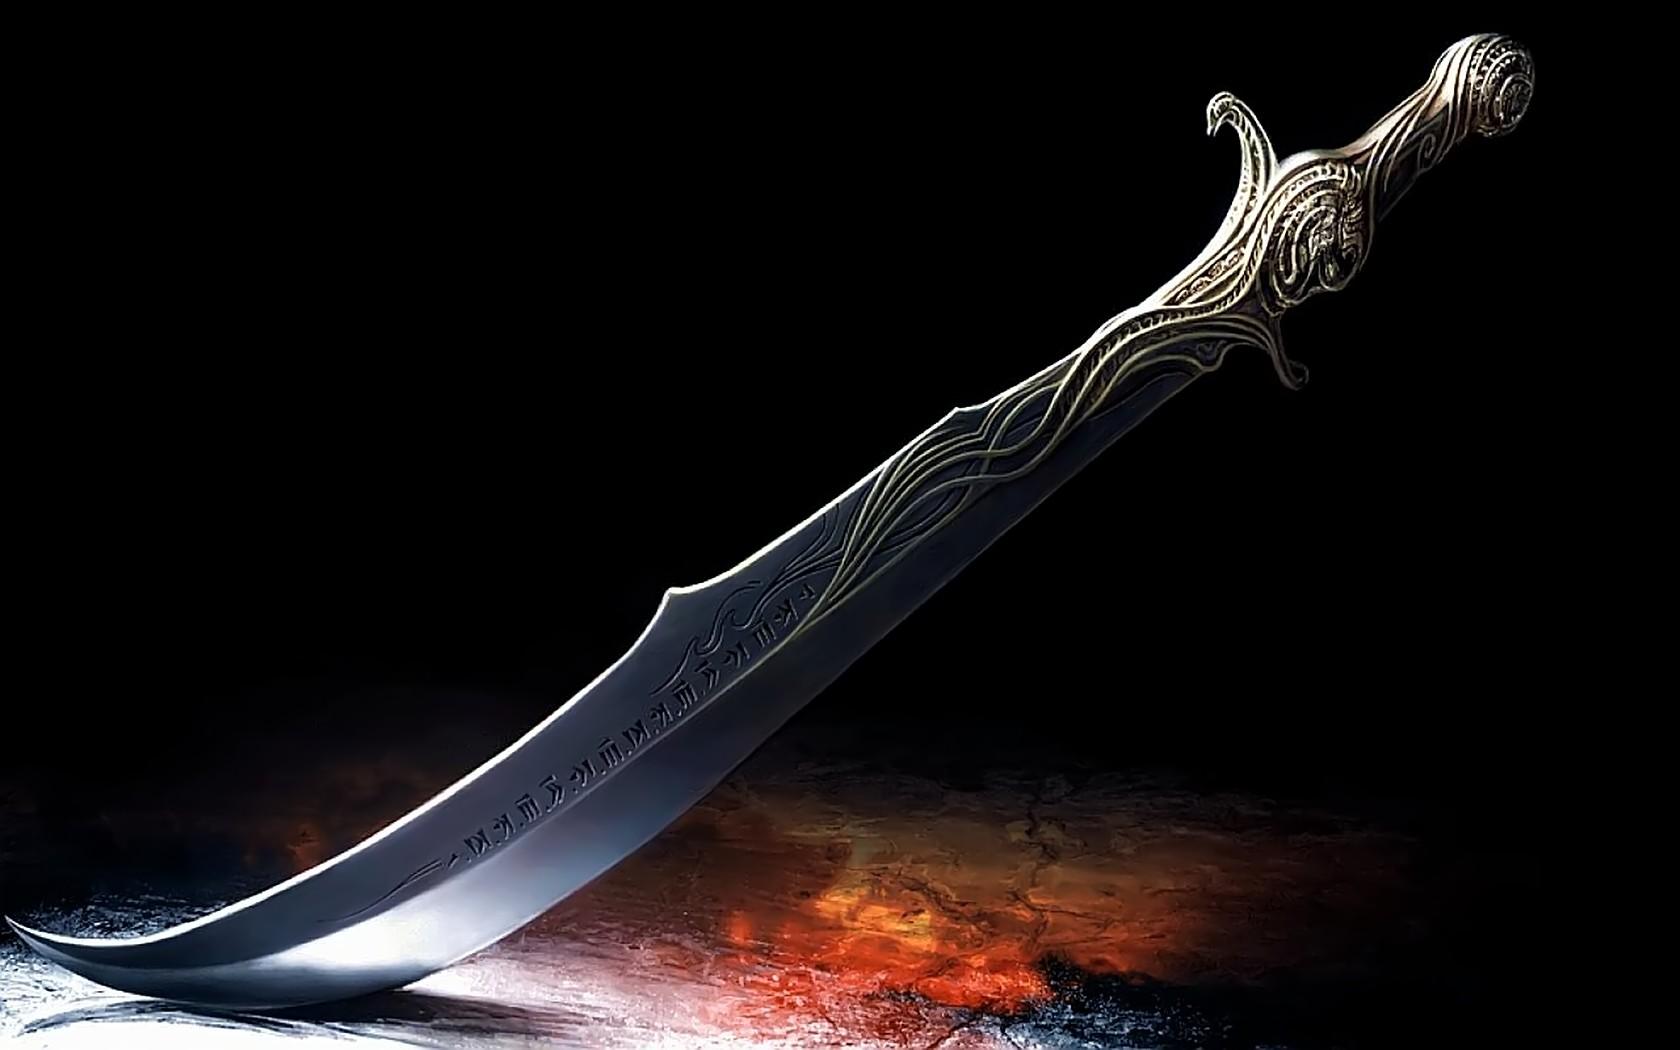 fantasy, weapon, blade, prince of persia, sword Desktop home screen Wallpaper